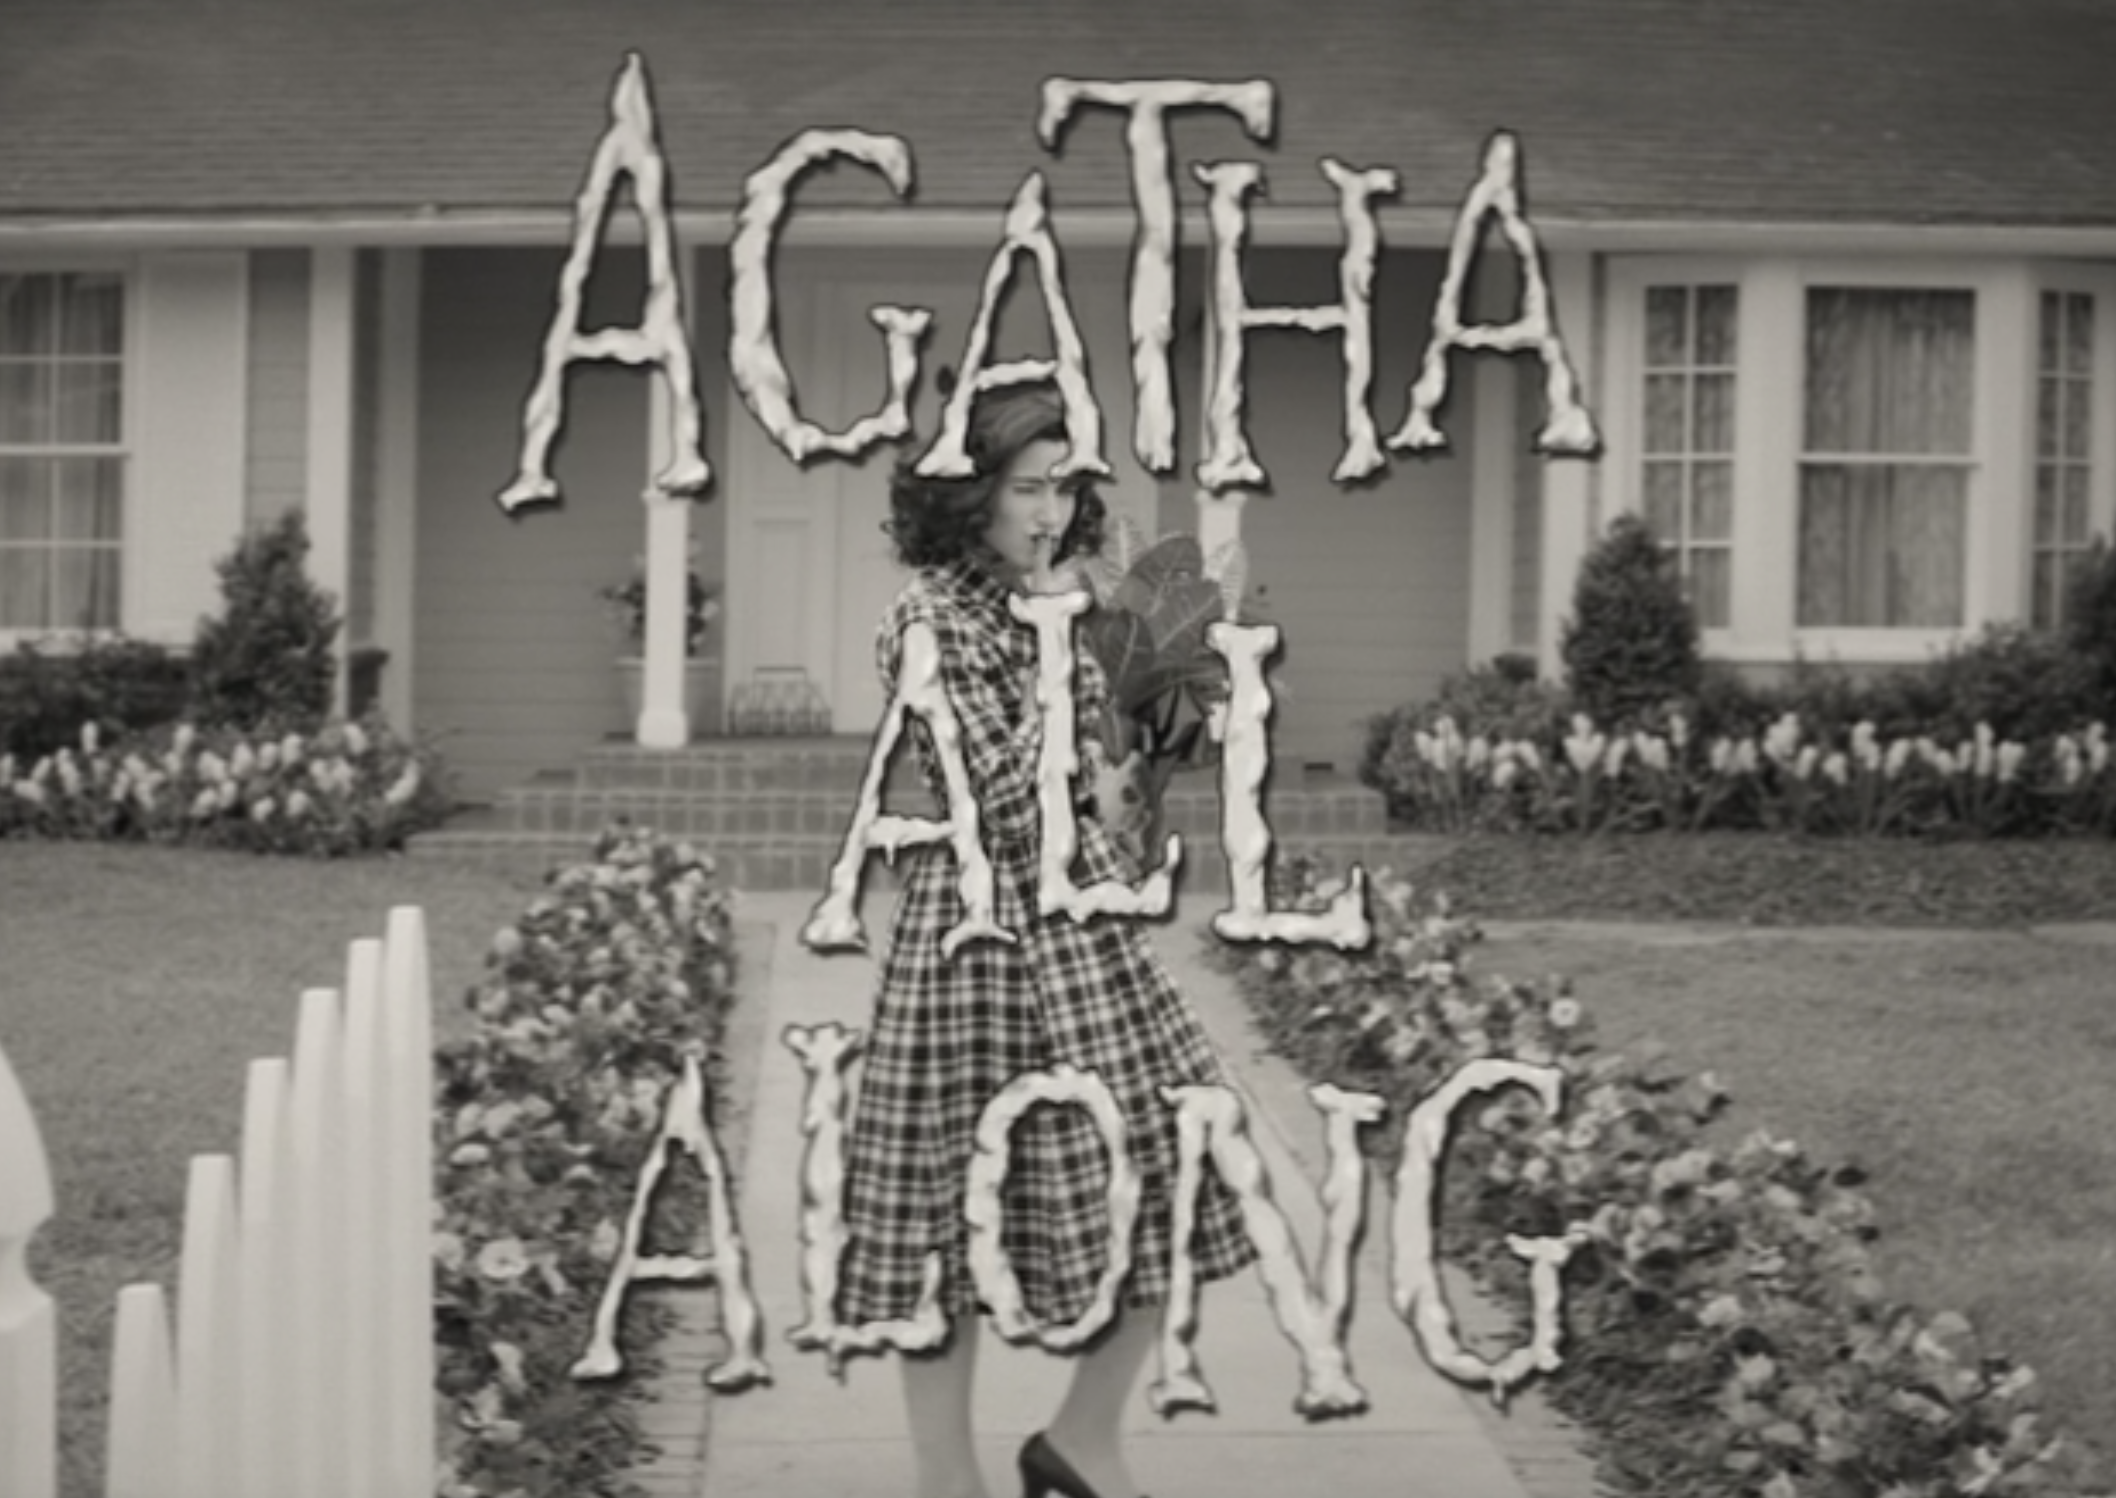 Agatha Along title card